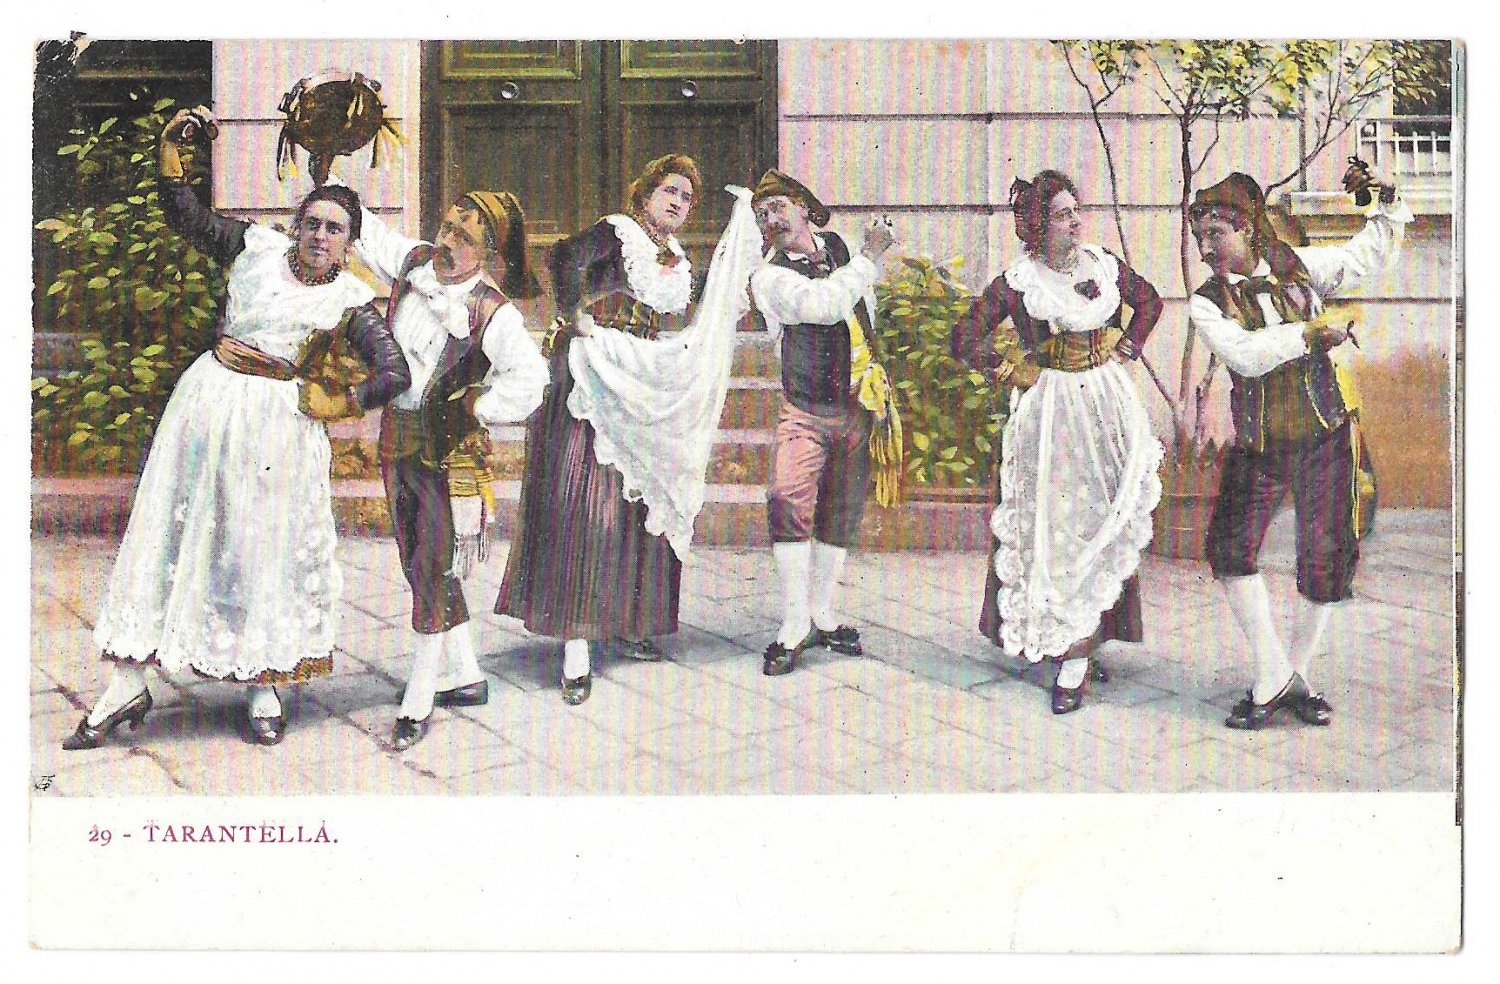 Italy Tarantella Folk Dance Traditional Dress Costume Vintage Postcard